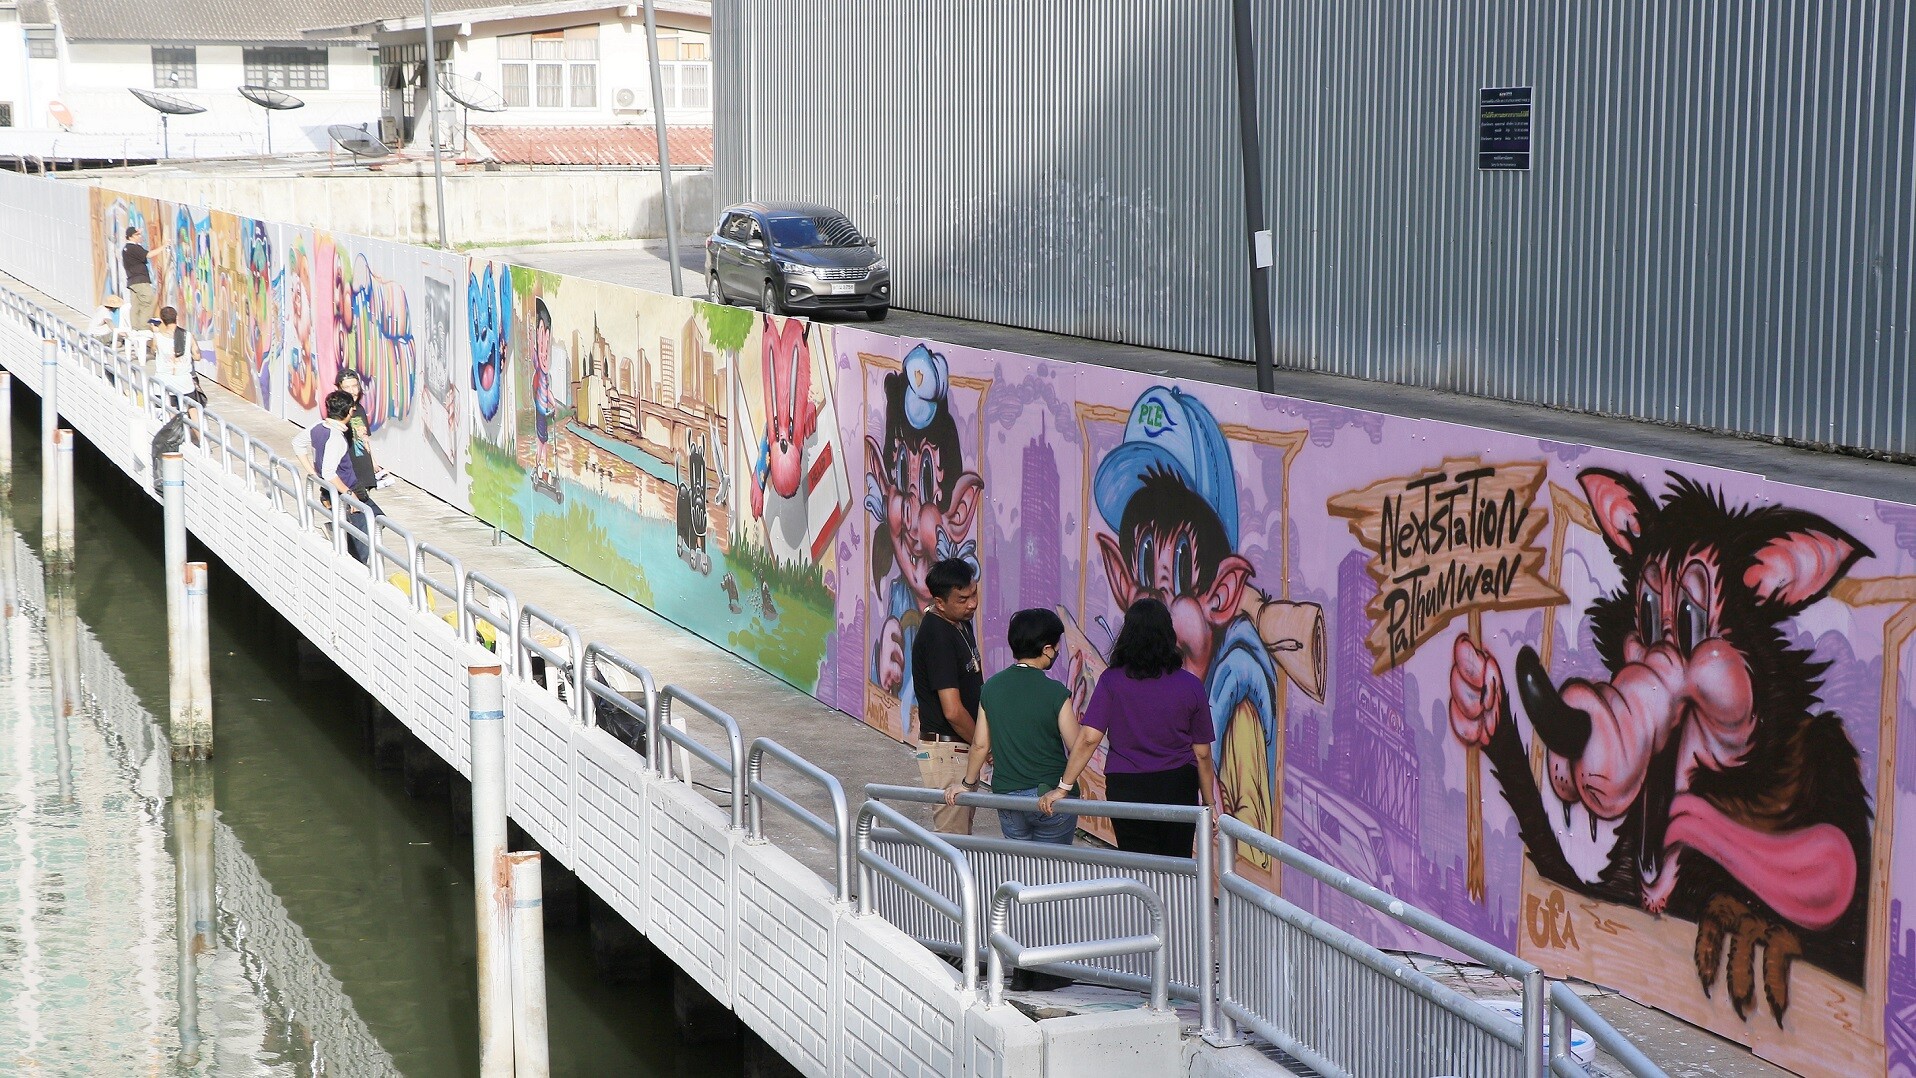 Street Art แห่งใหม่ใจกลางกรุง "เอ็ม บี เค เซ็นเตอร์" สนับสนุนสำนักงานเขตปทุมวัน ปรับปรุงภูมิทัศน์ริมทางเดินเลียบคลองแสนแสบ